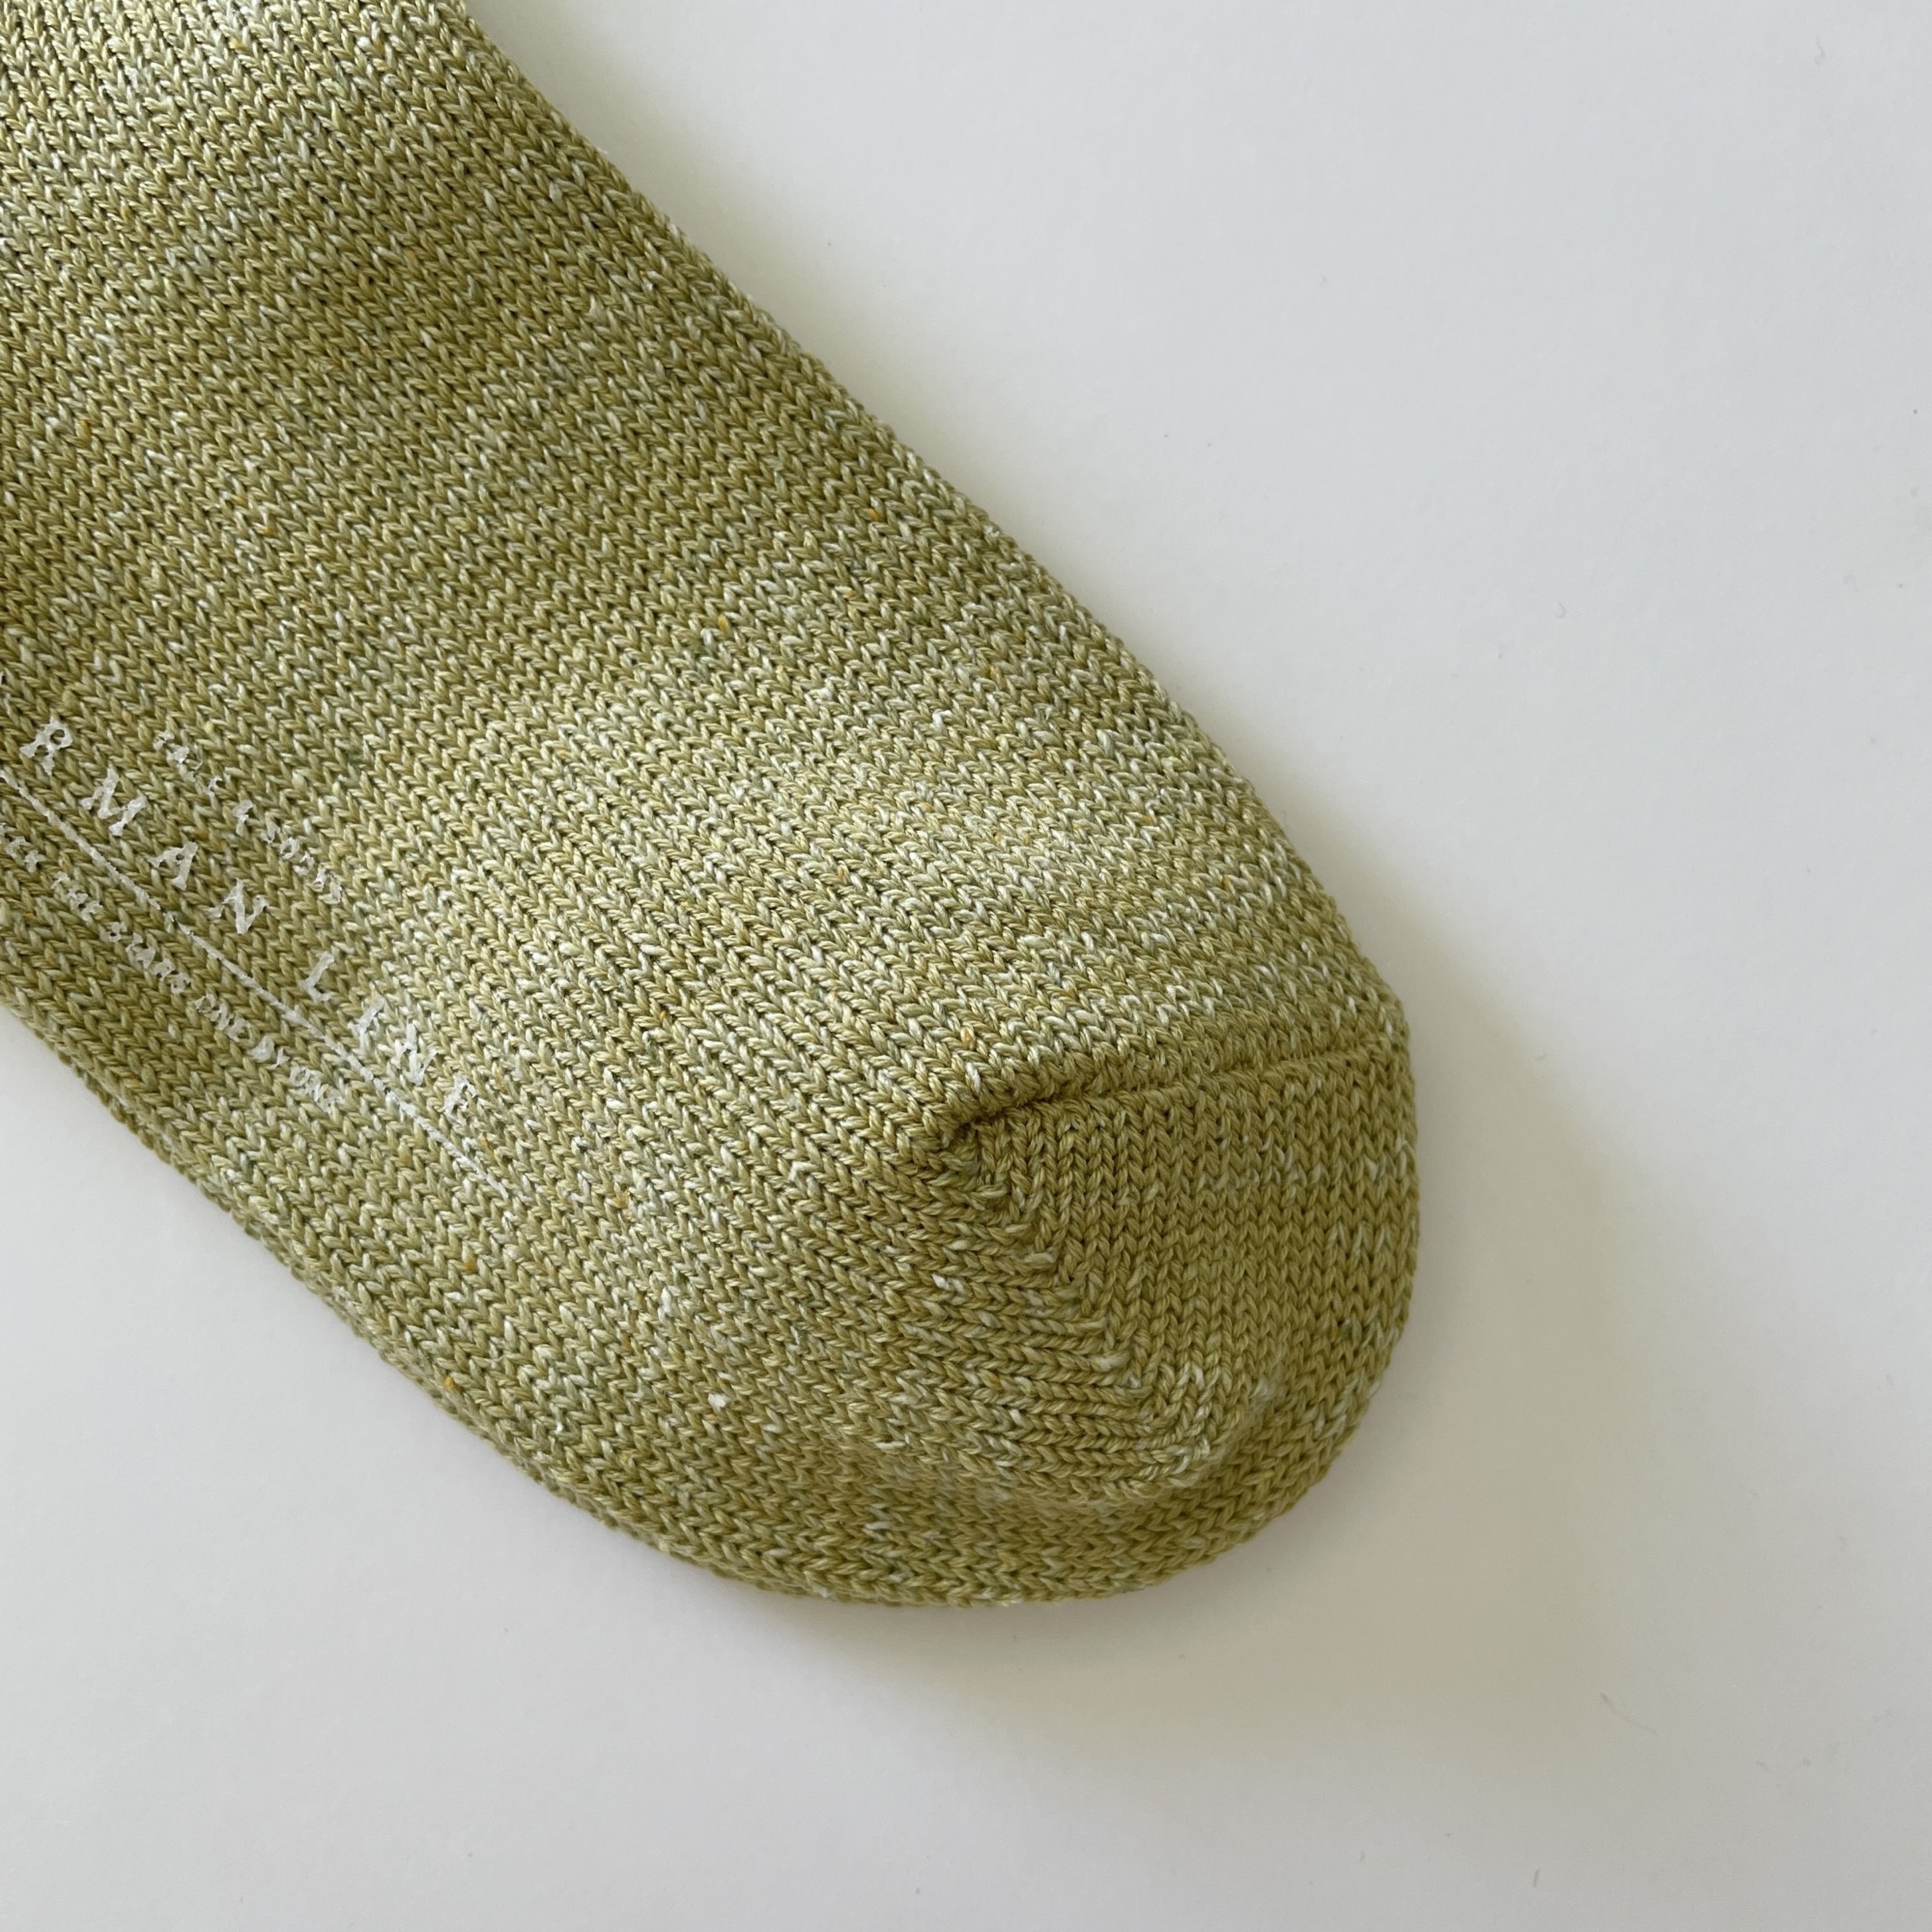 KARMAN LINE NORMA / Socks / Pear / 23-25cm